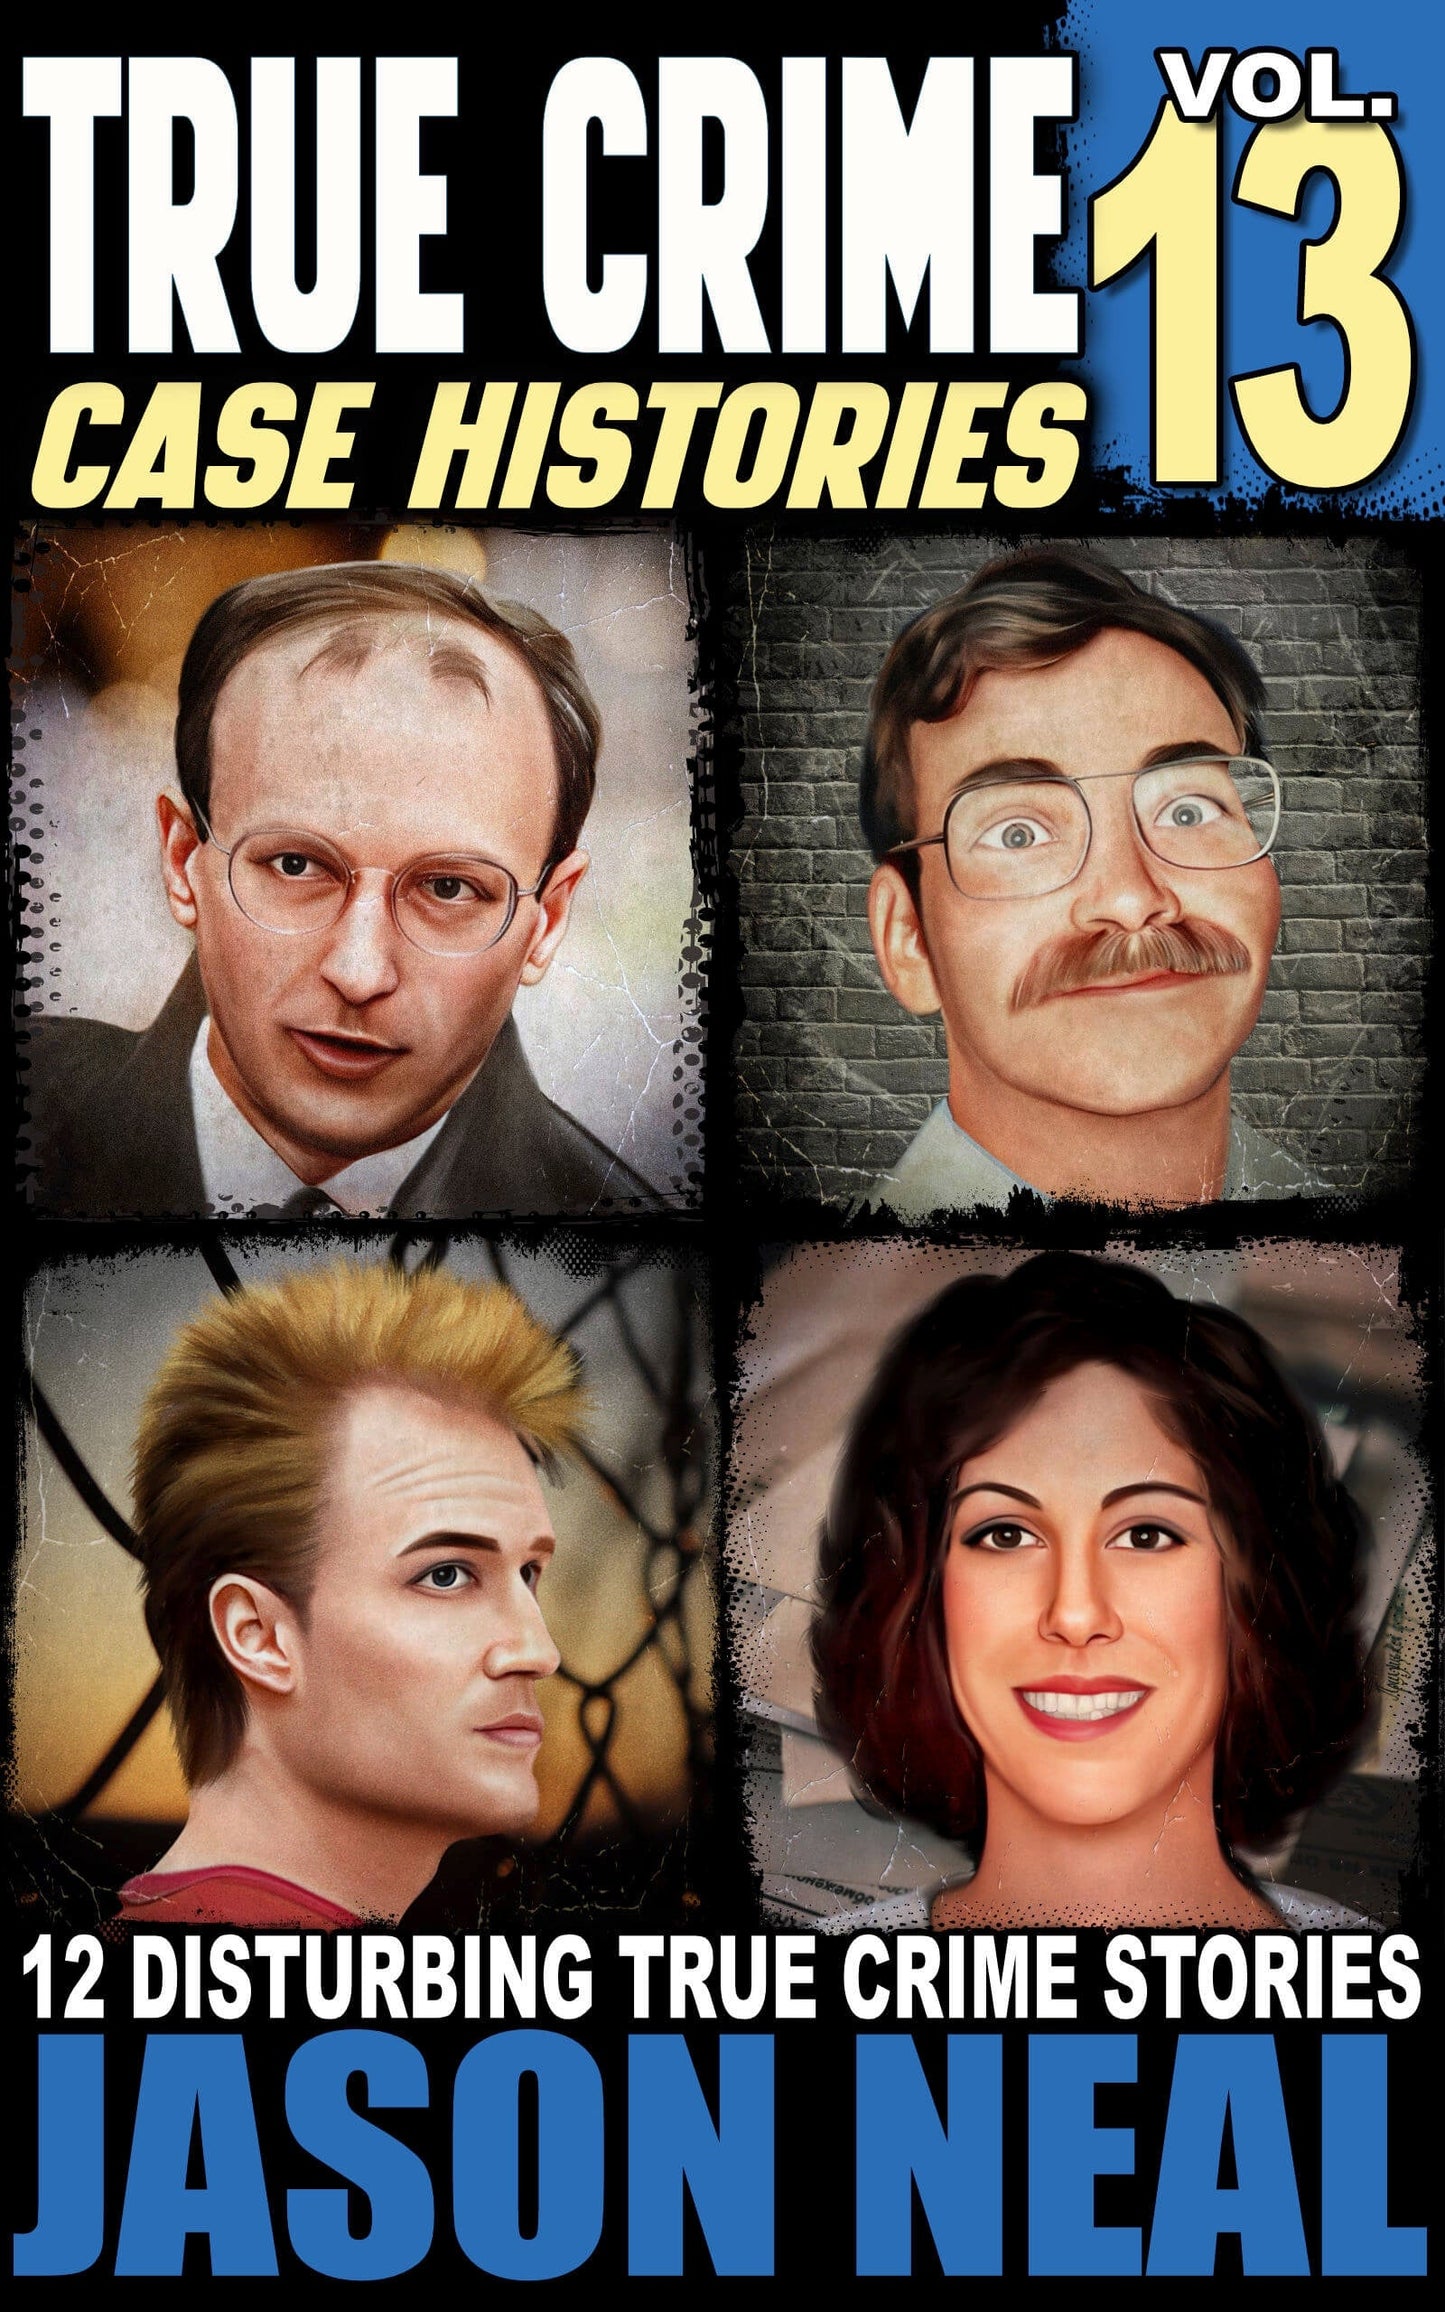 True Crime Case Histories - Volume 13 (HARDCOVER)